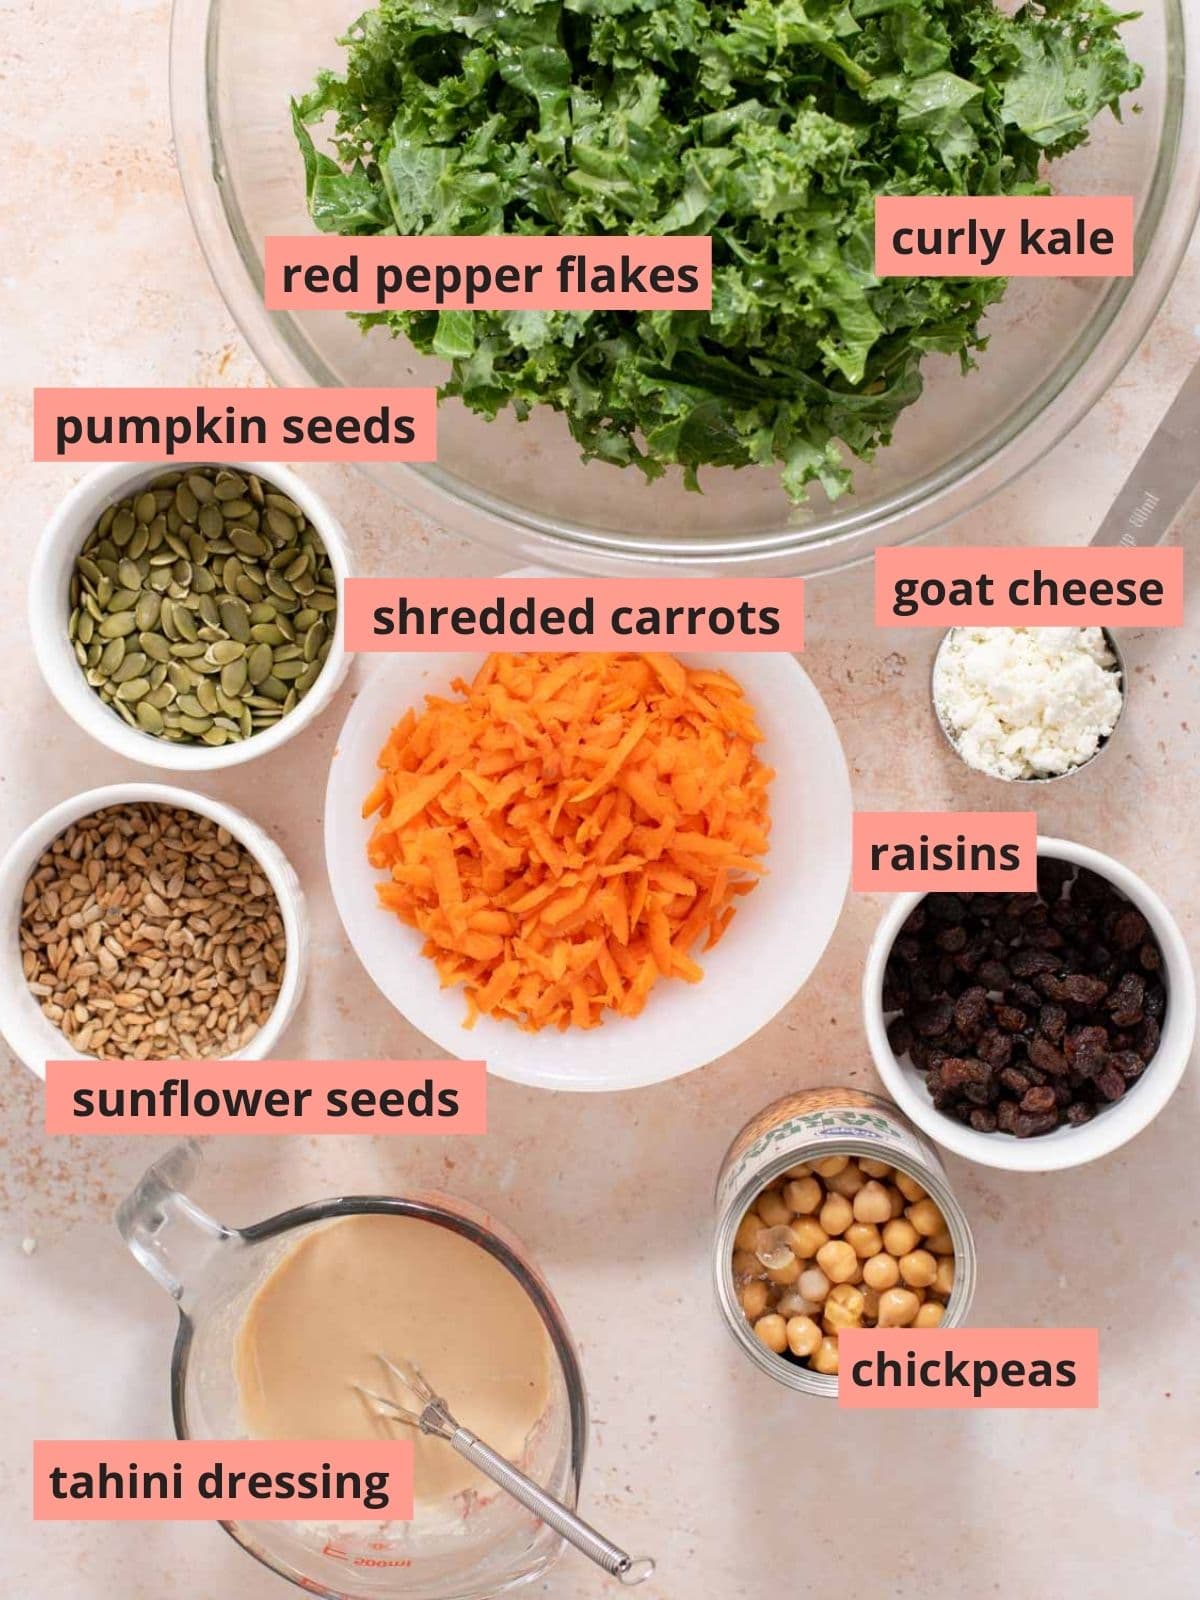 Labeled ingredients used to make kale salad.